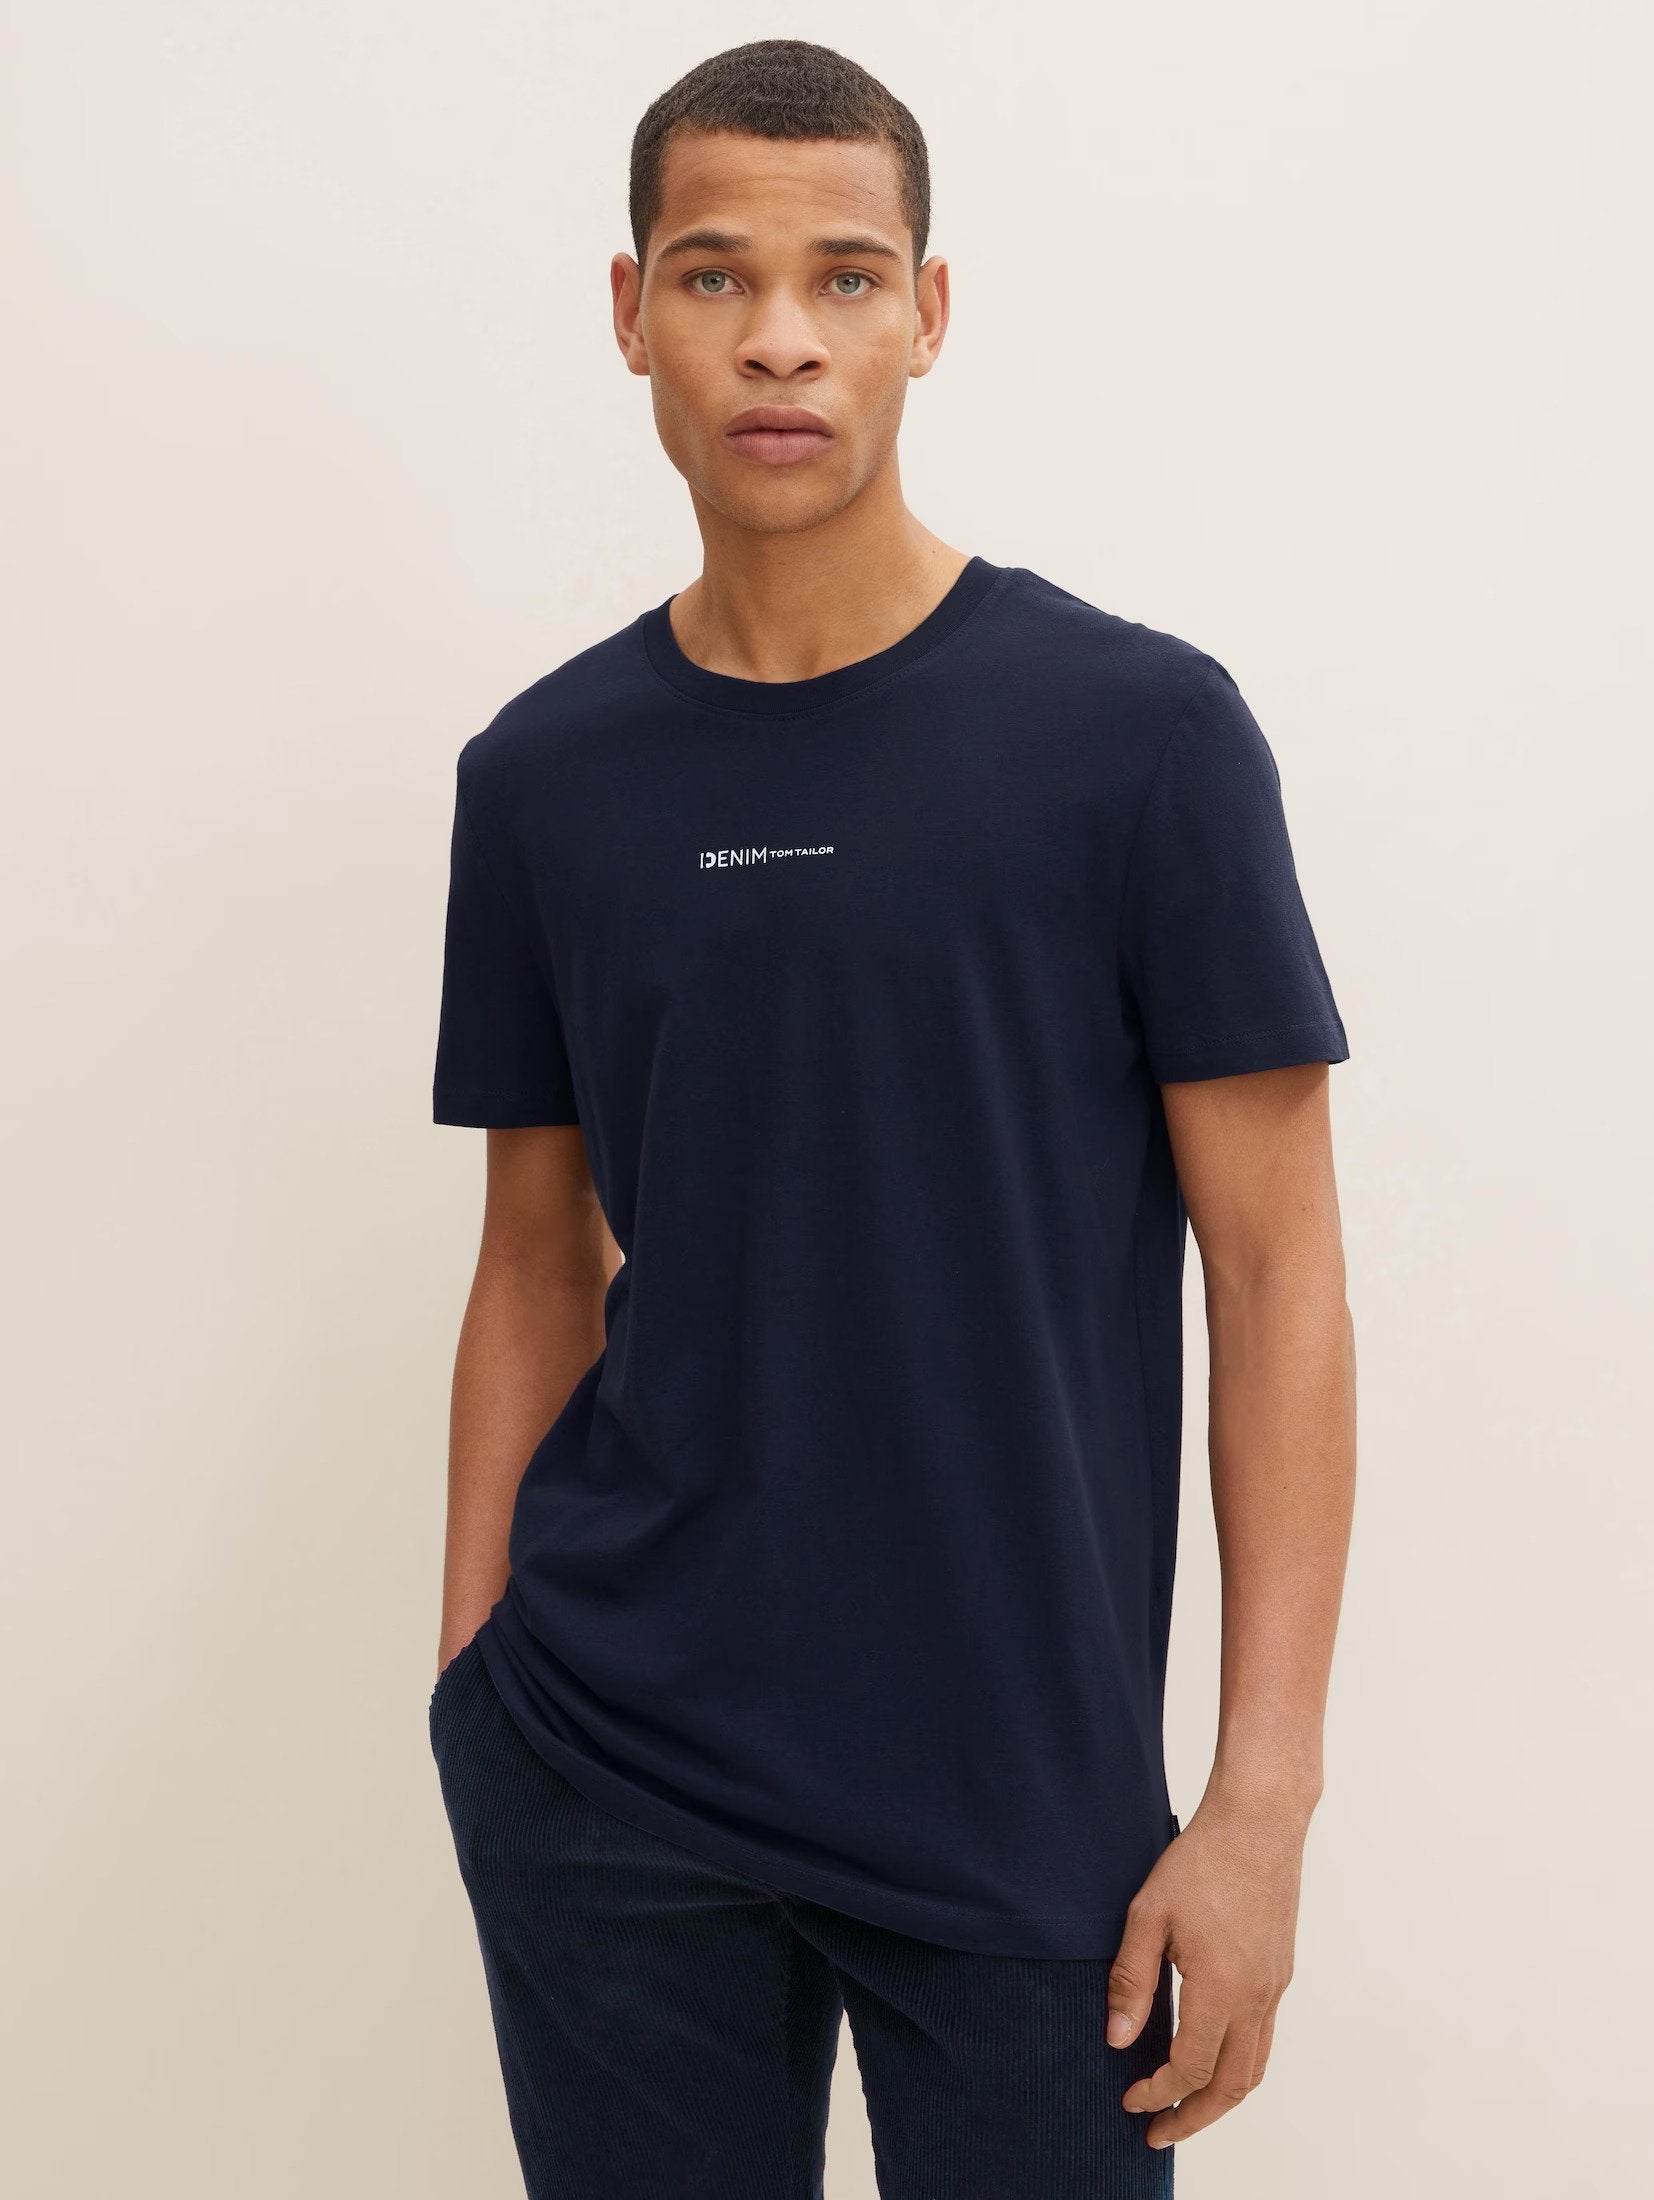 Tom Tailor Plain Navy T-shirt With Denim Design